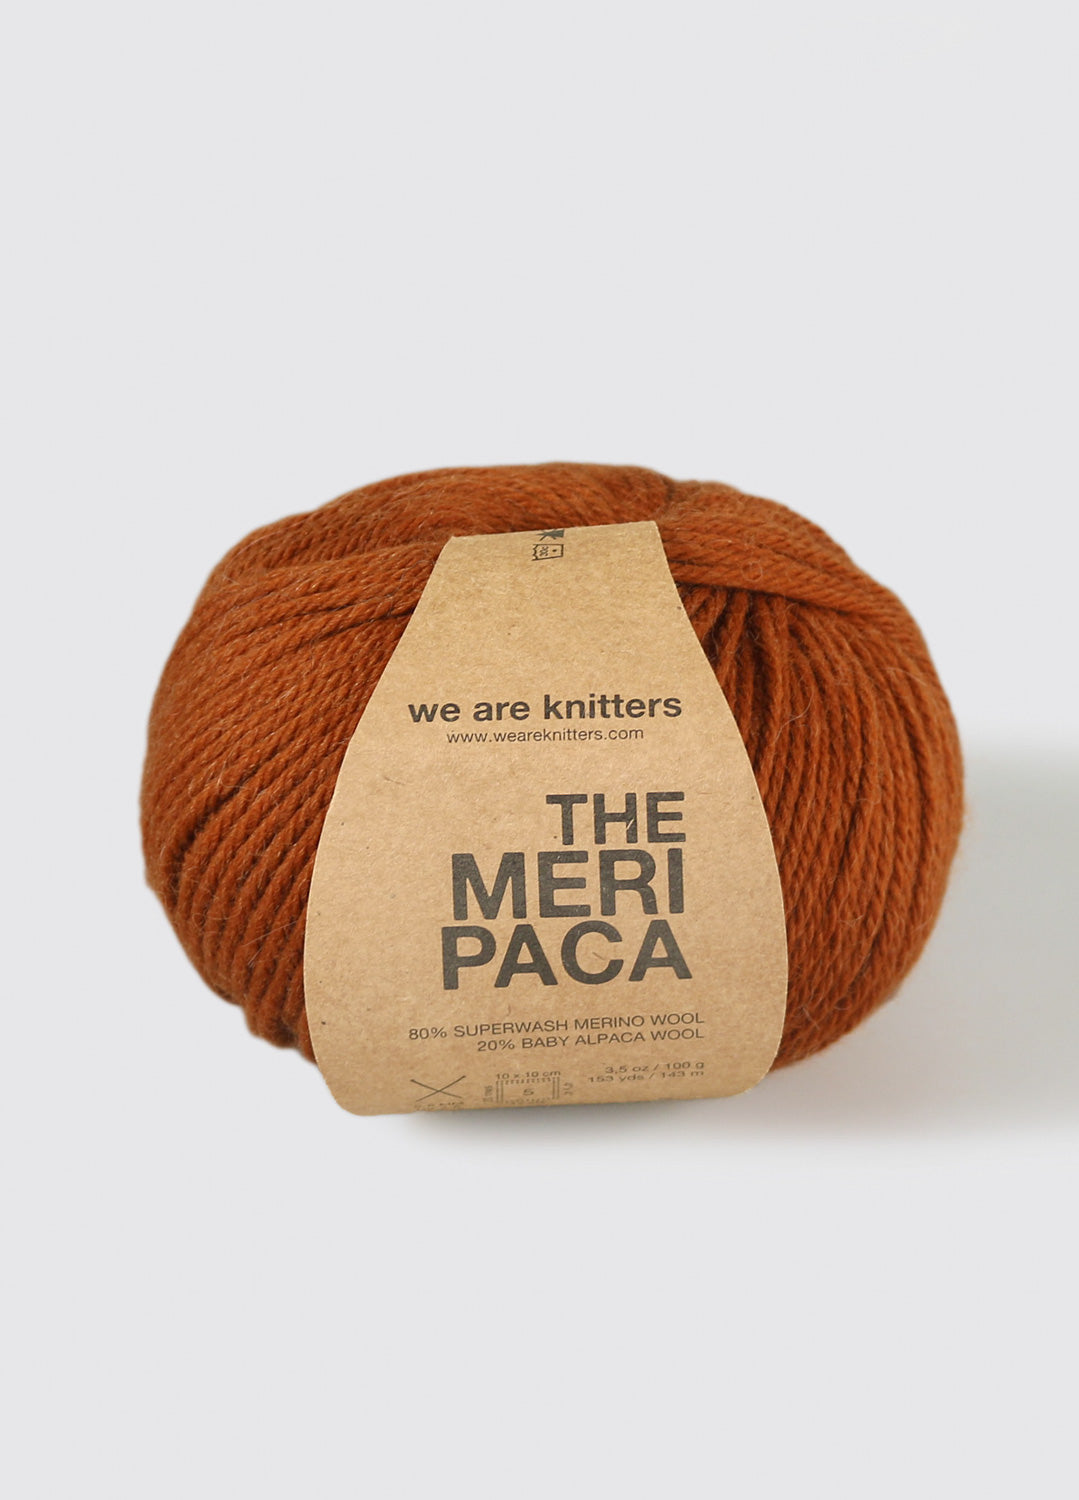 10 Pack of Meripaca Yarn Balls